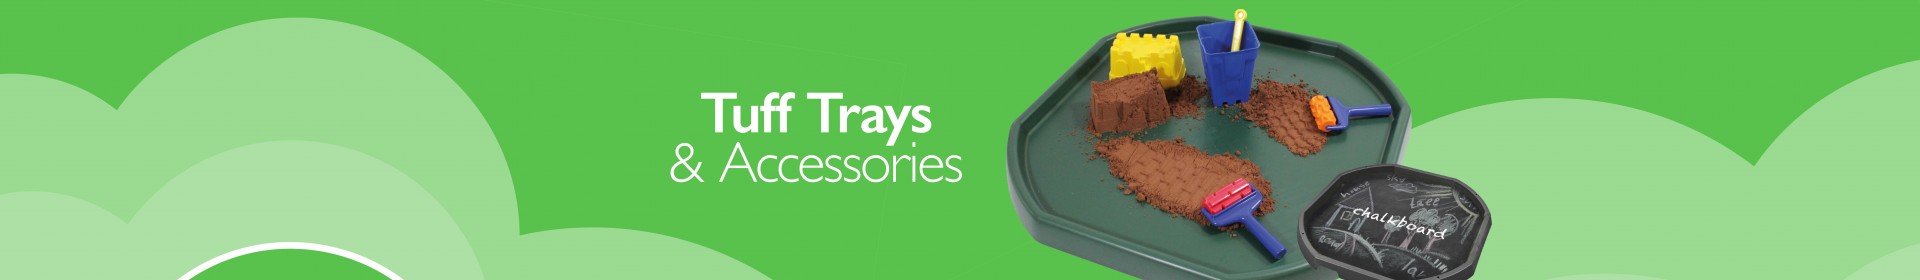 Tuff Trays & Accessories